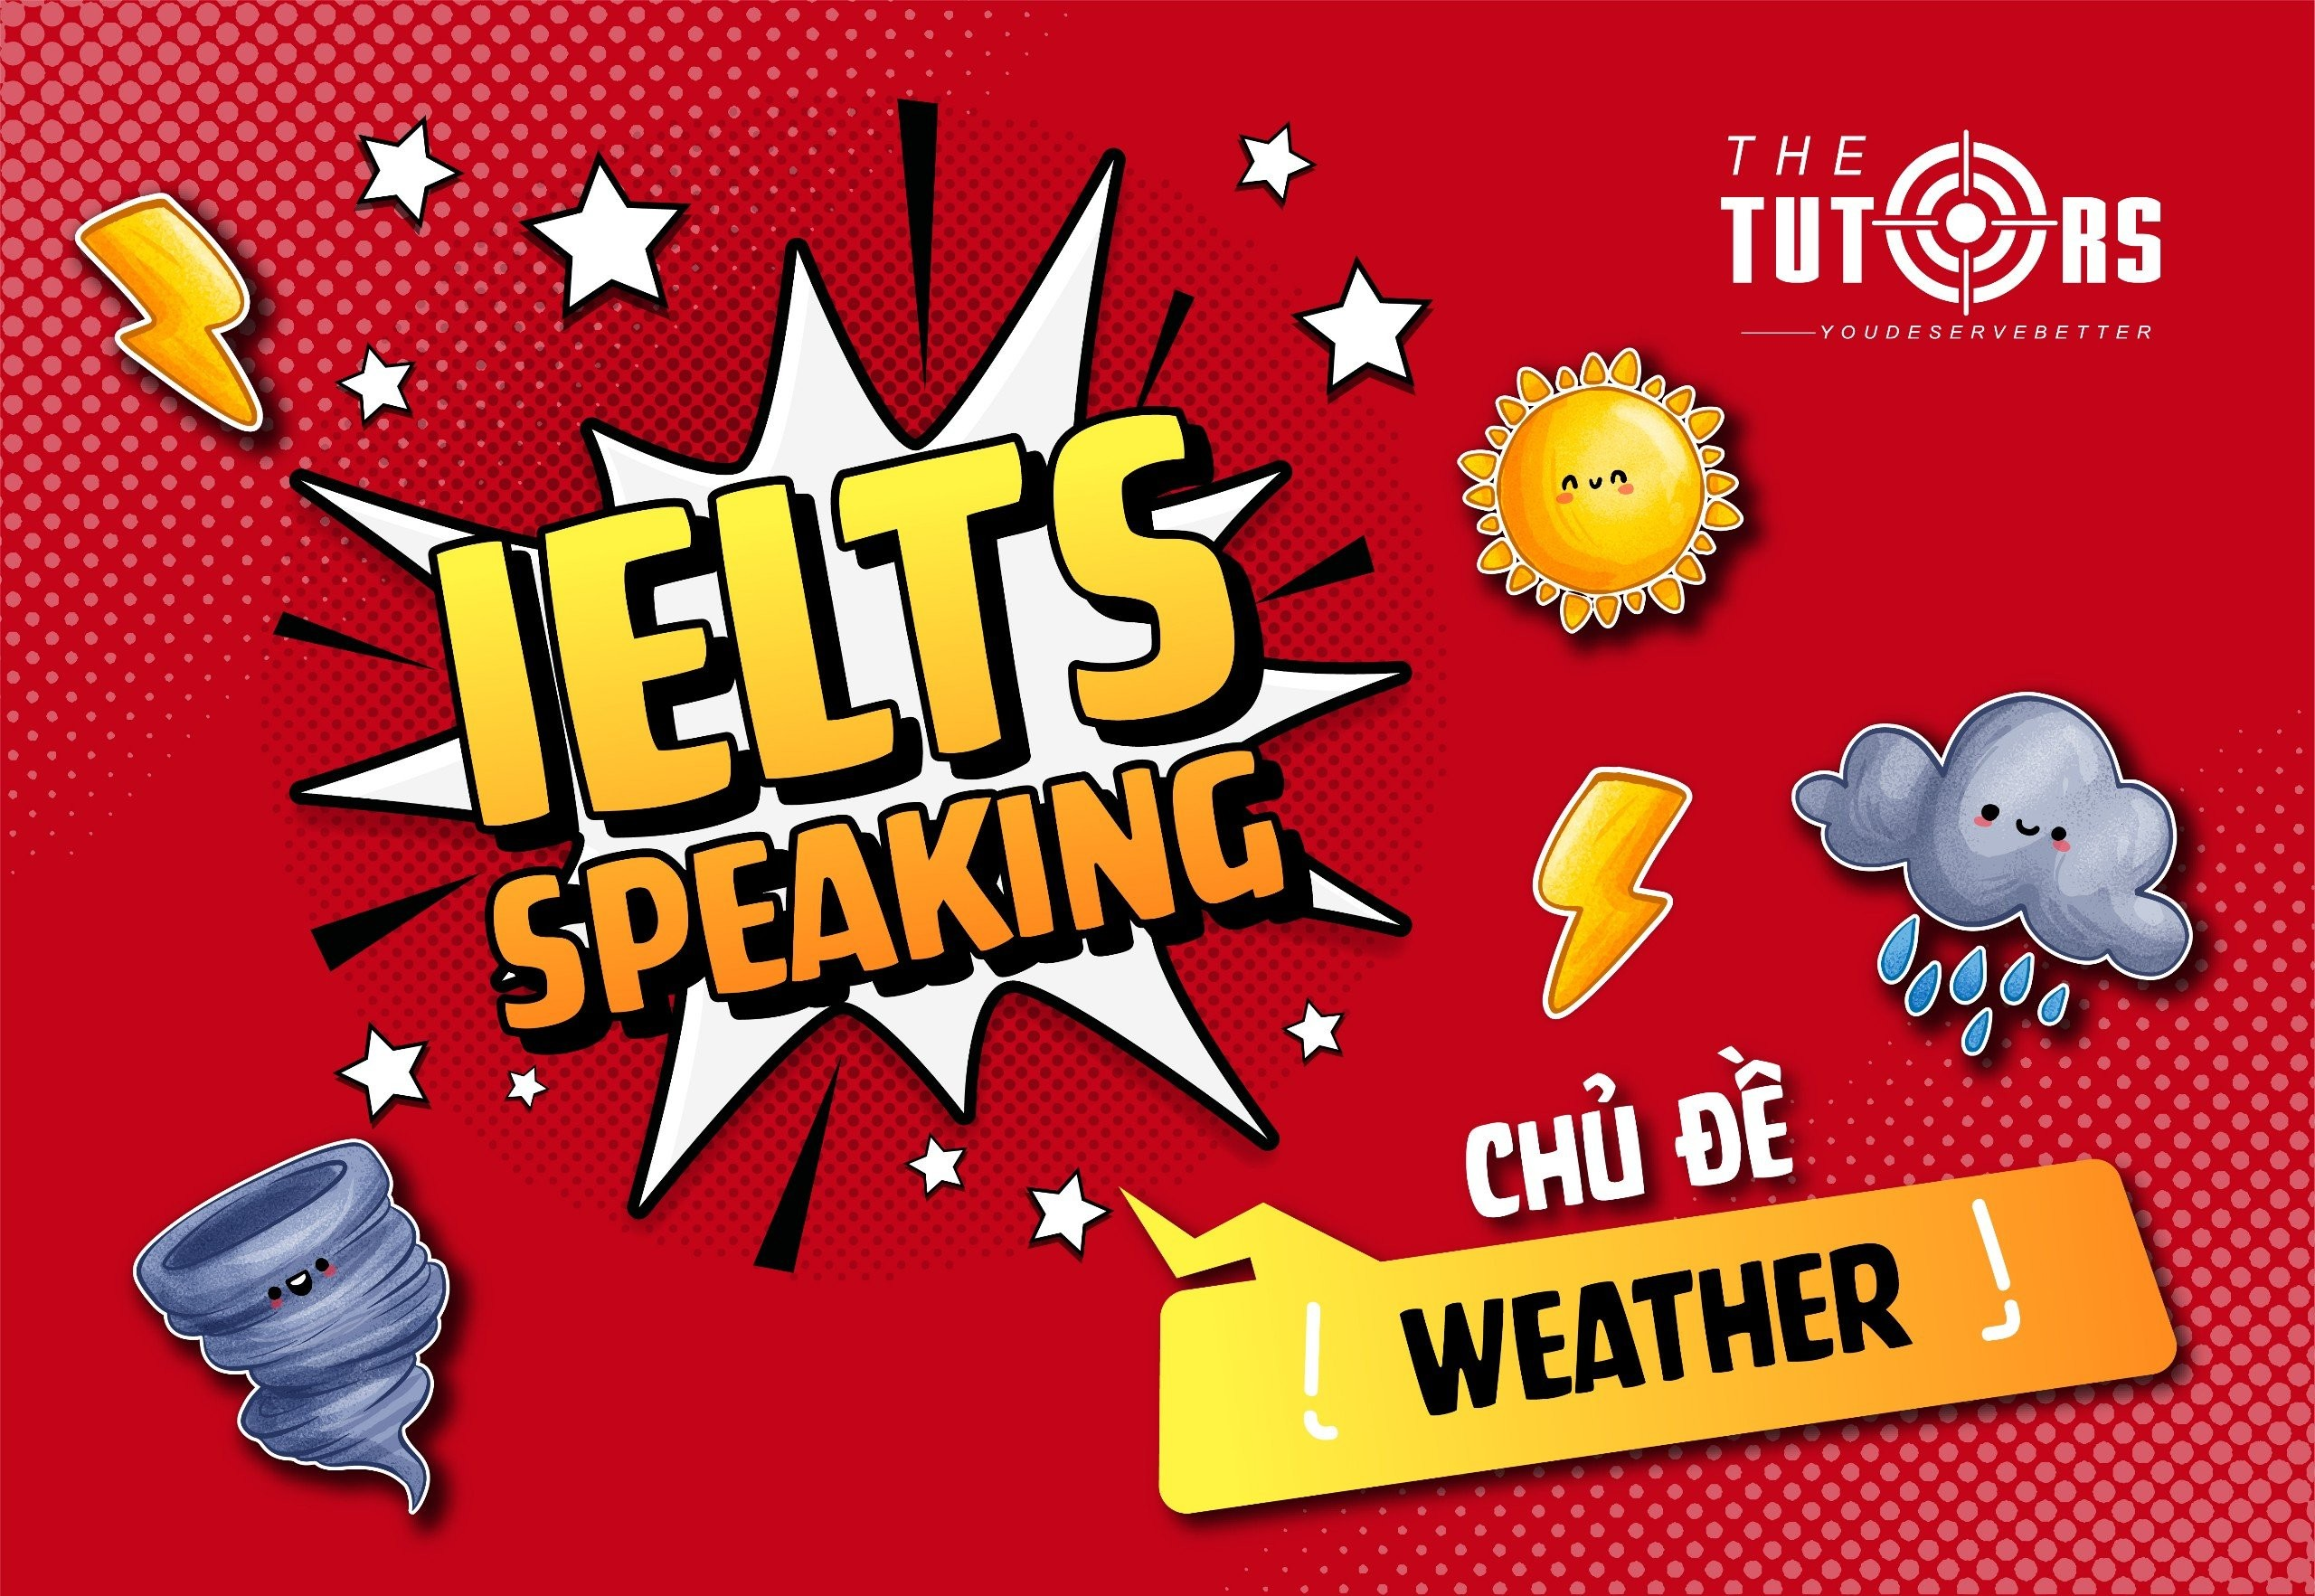 IELTS Speaking Chủ Đề Weather: Câu Hỏi, Từ Vựng và Bài Mẫu